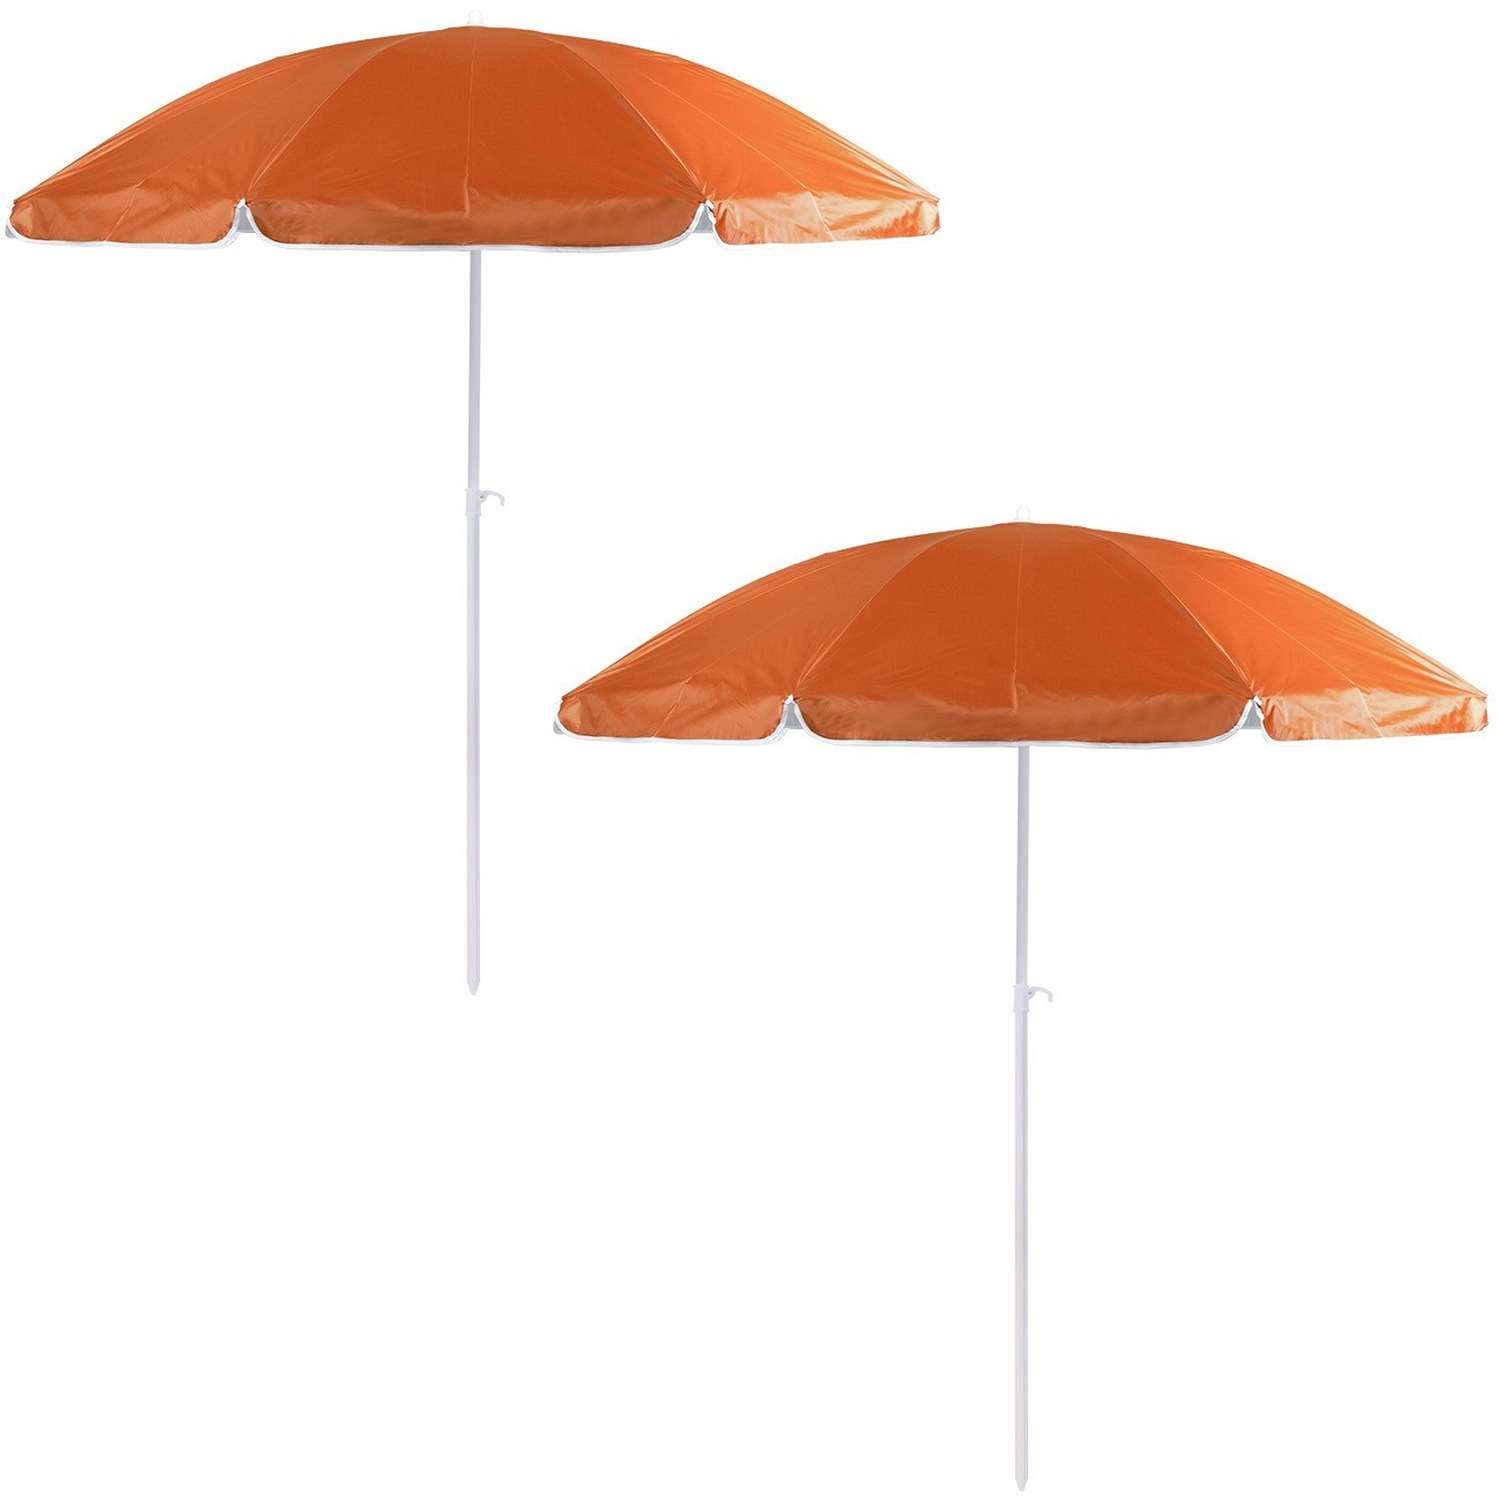 Voordeel set van 2x strandparasols oranje 200 cm diameter